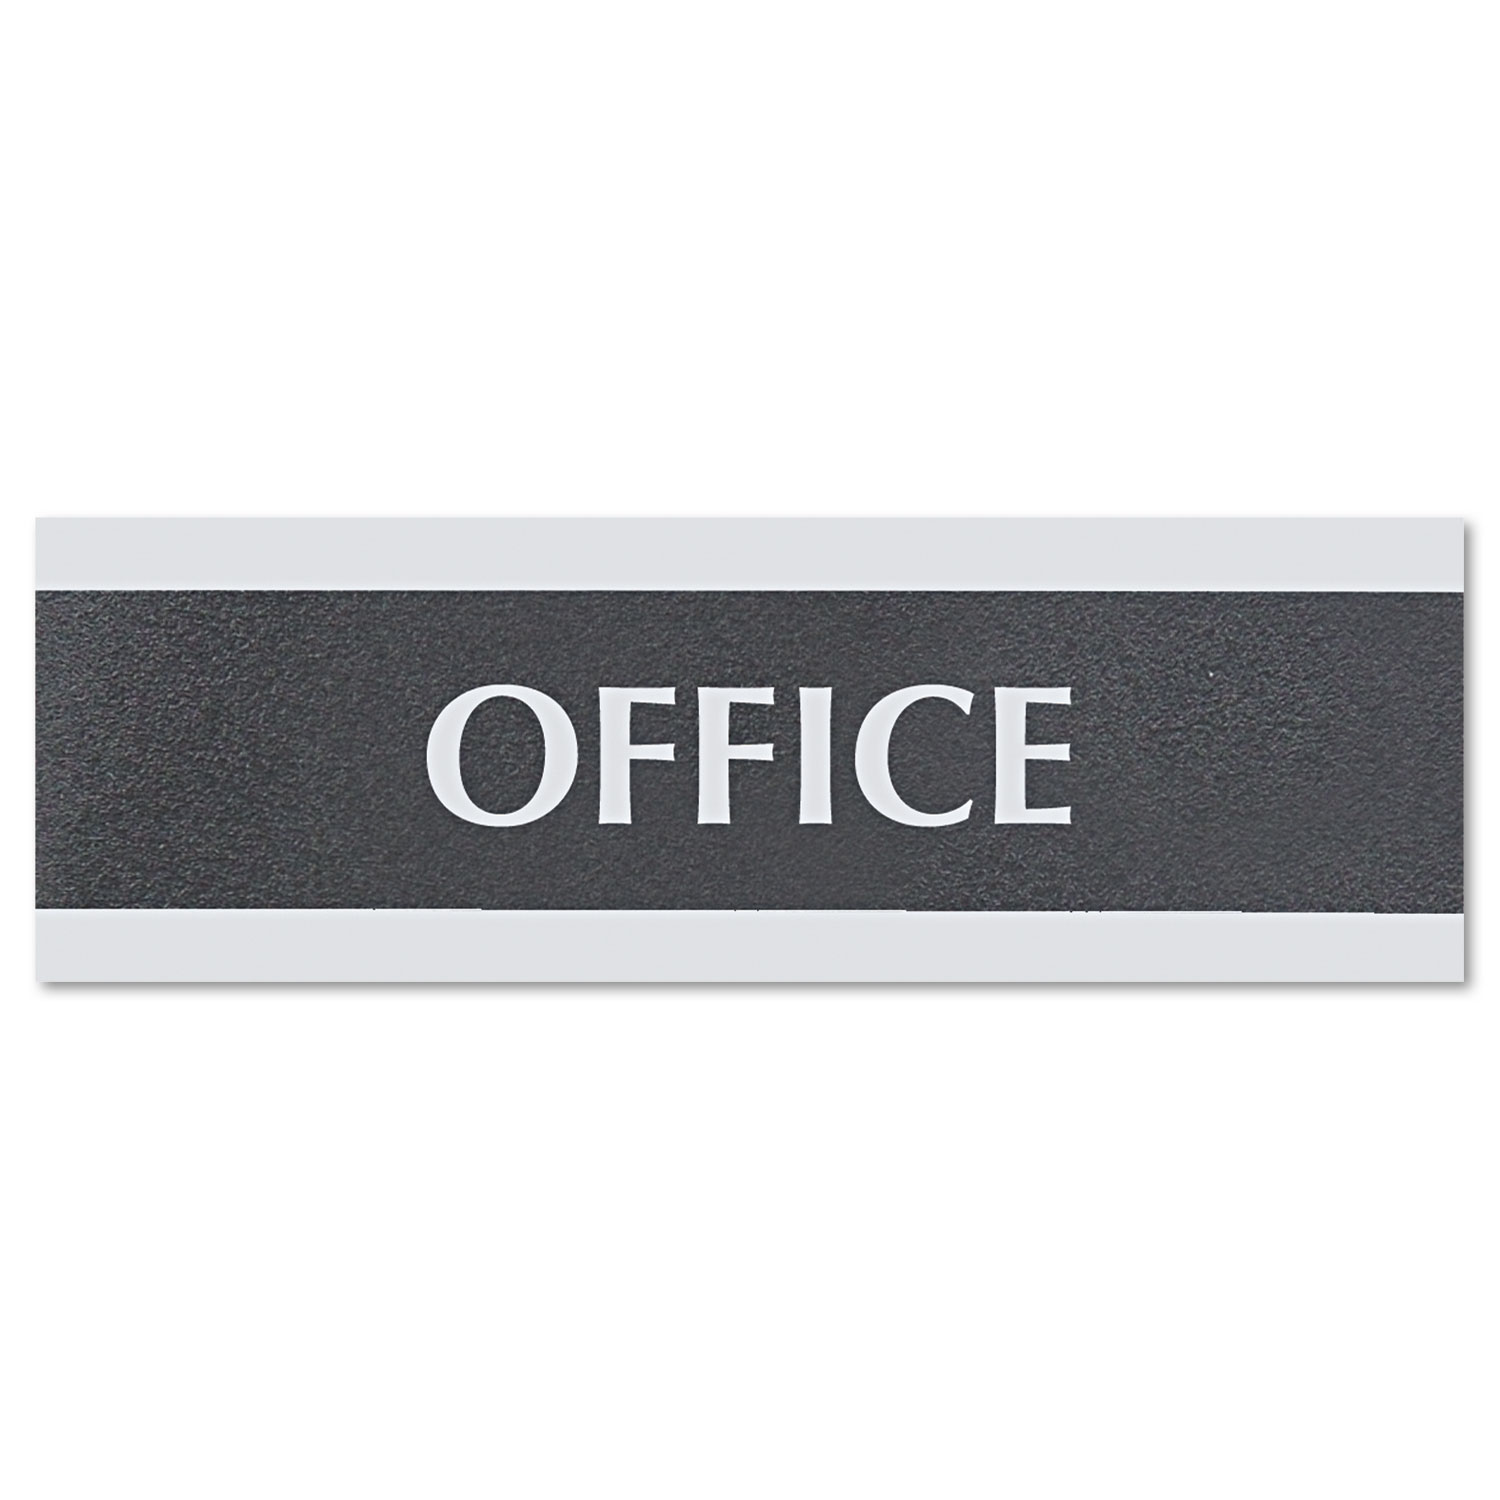  Headline Sign 4762 Century Series Office Sign, OFFICE, 9 x 3, Black/Silver (USS4762) 